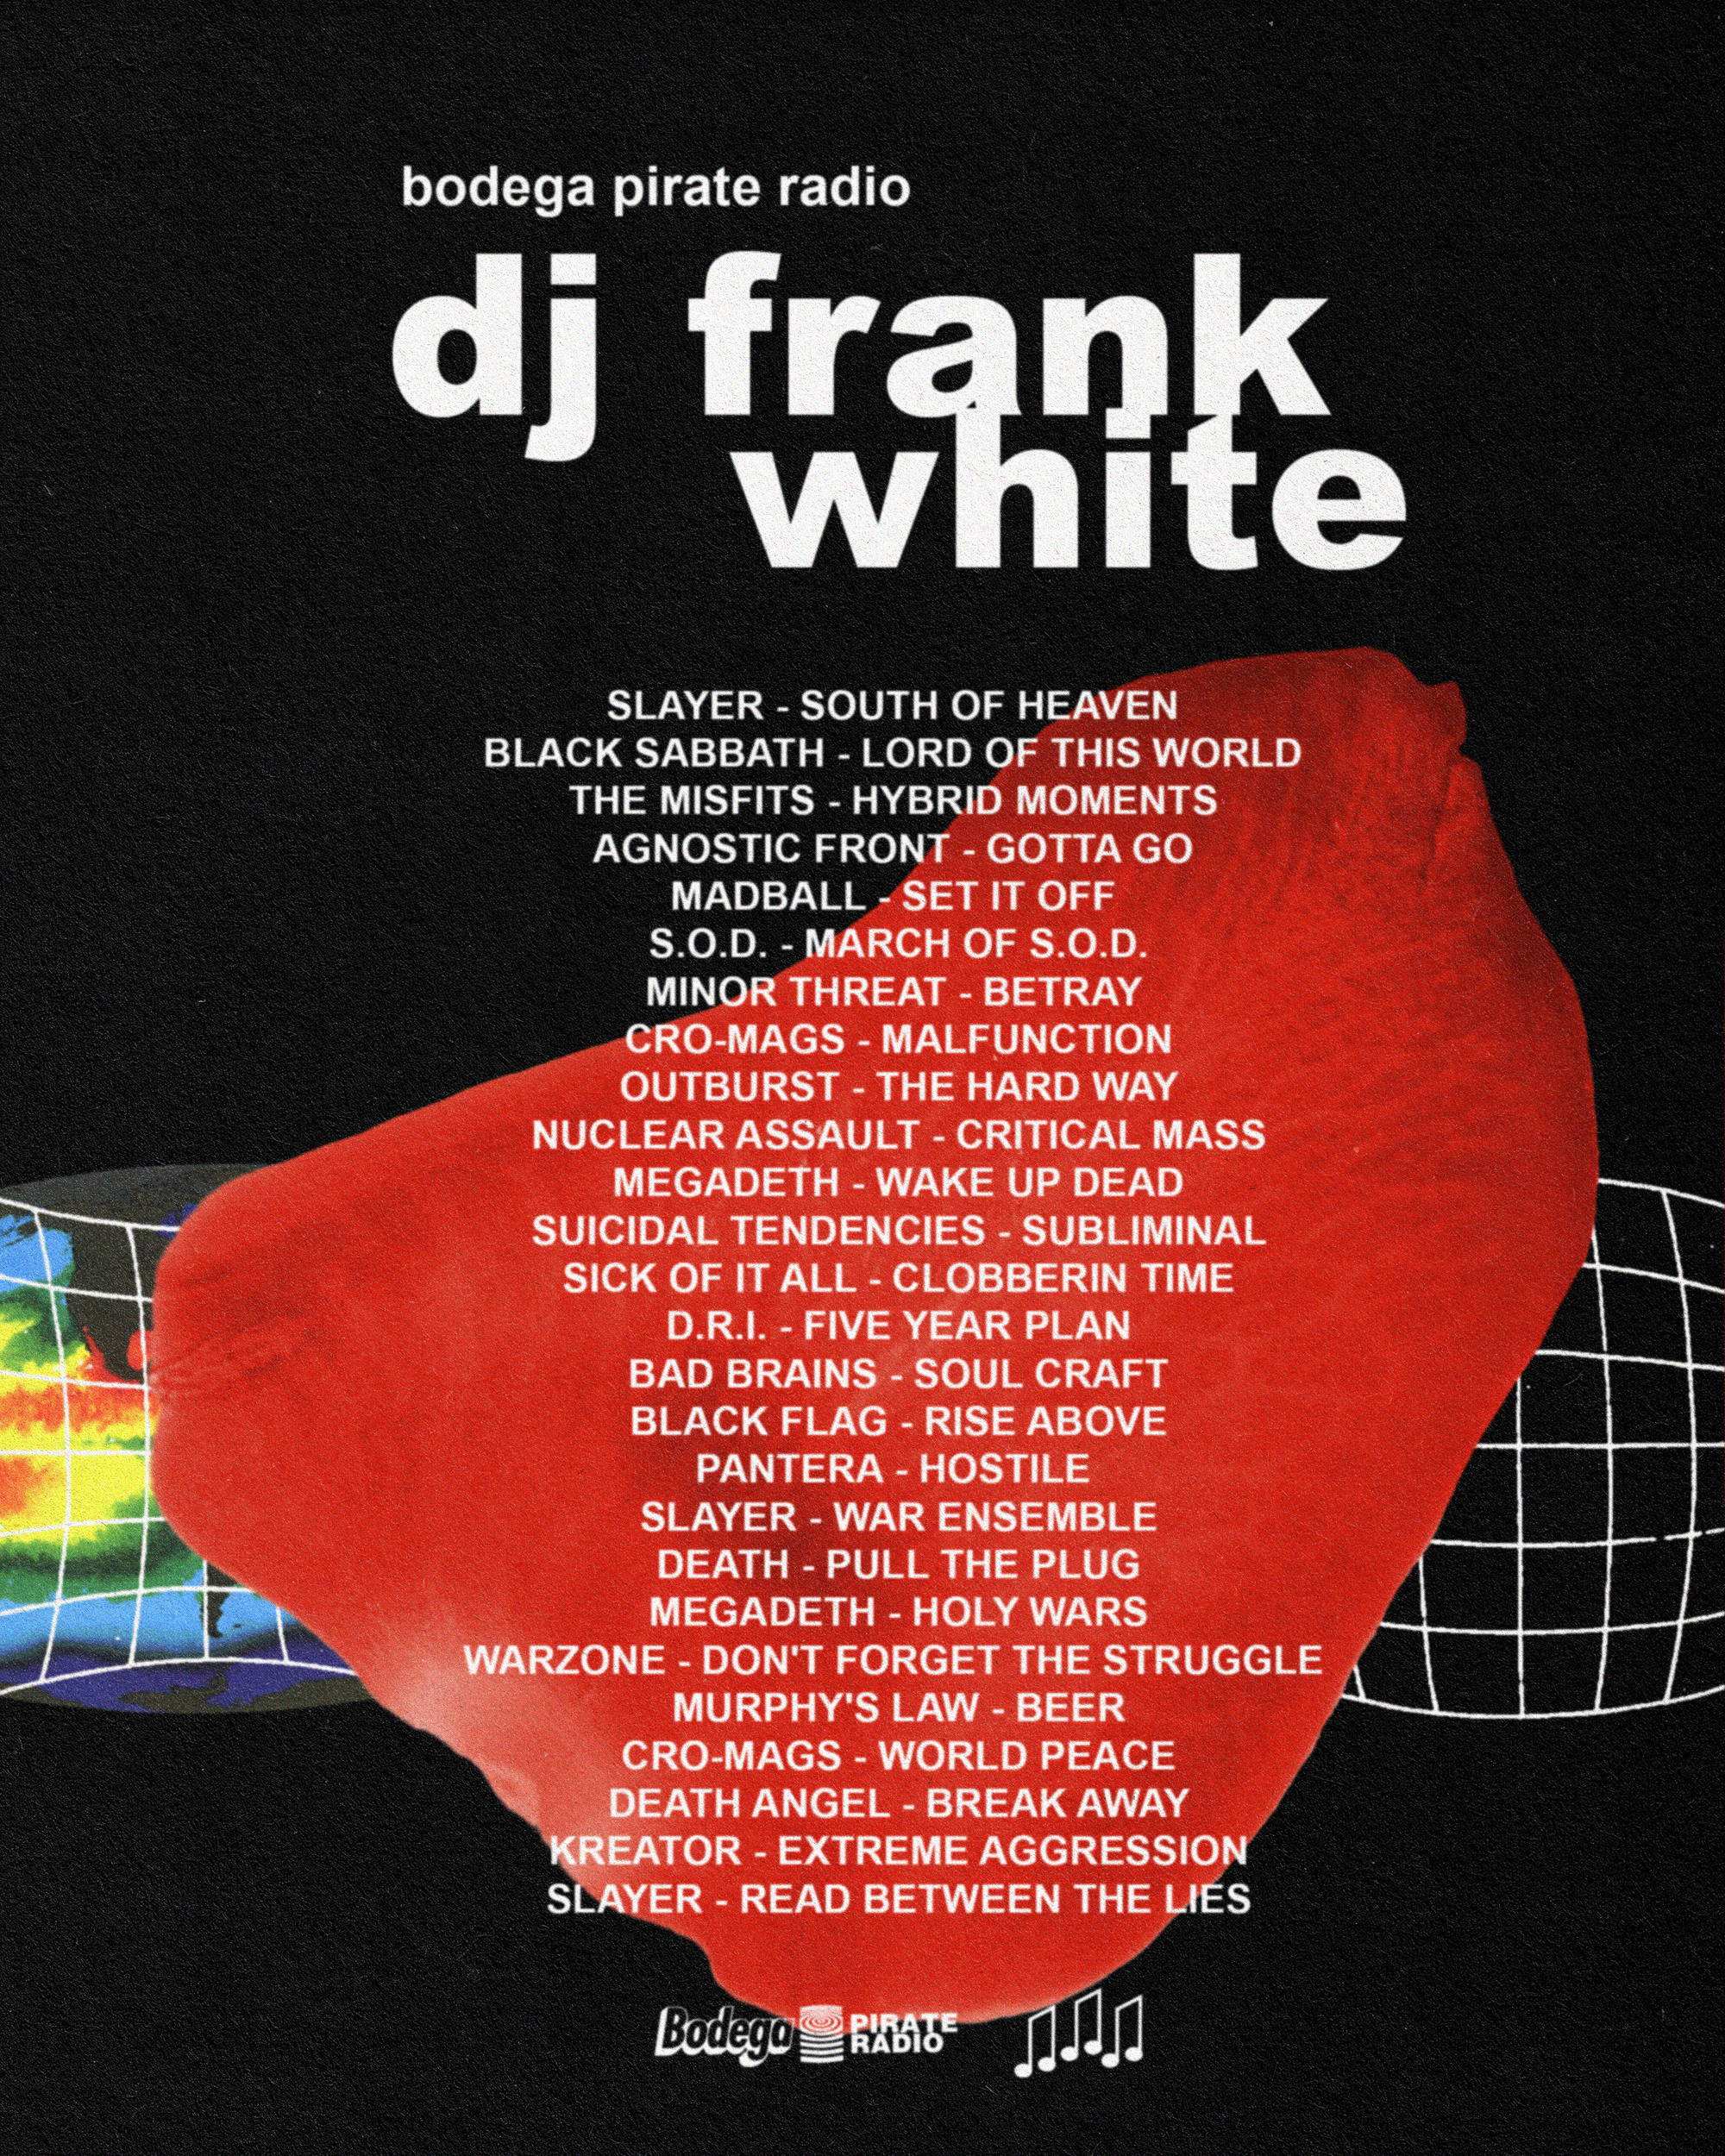 Episode #51: DJ Frank White